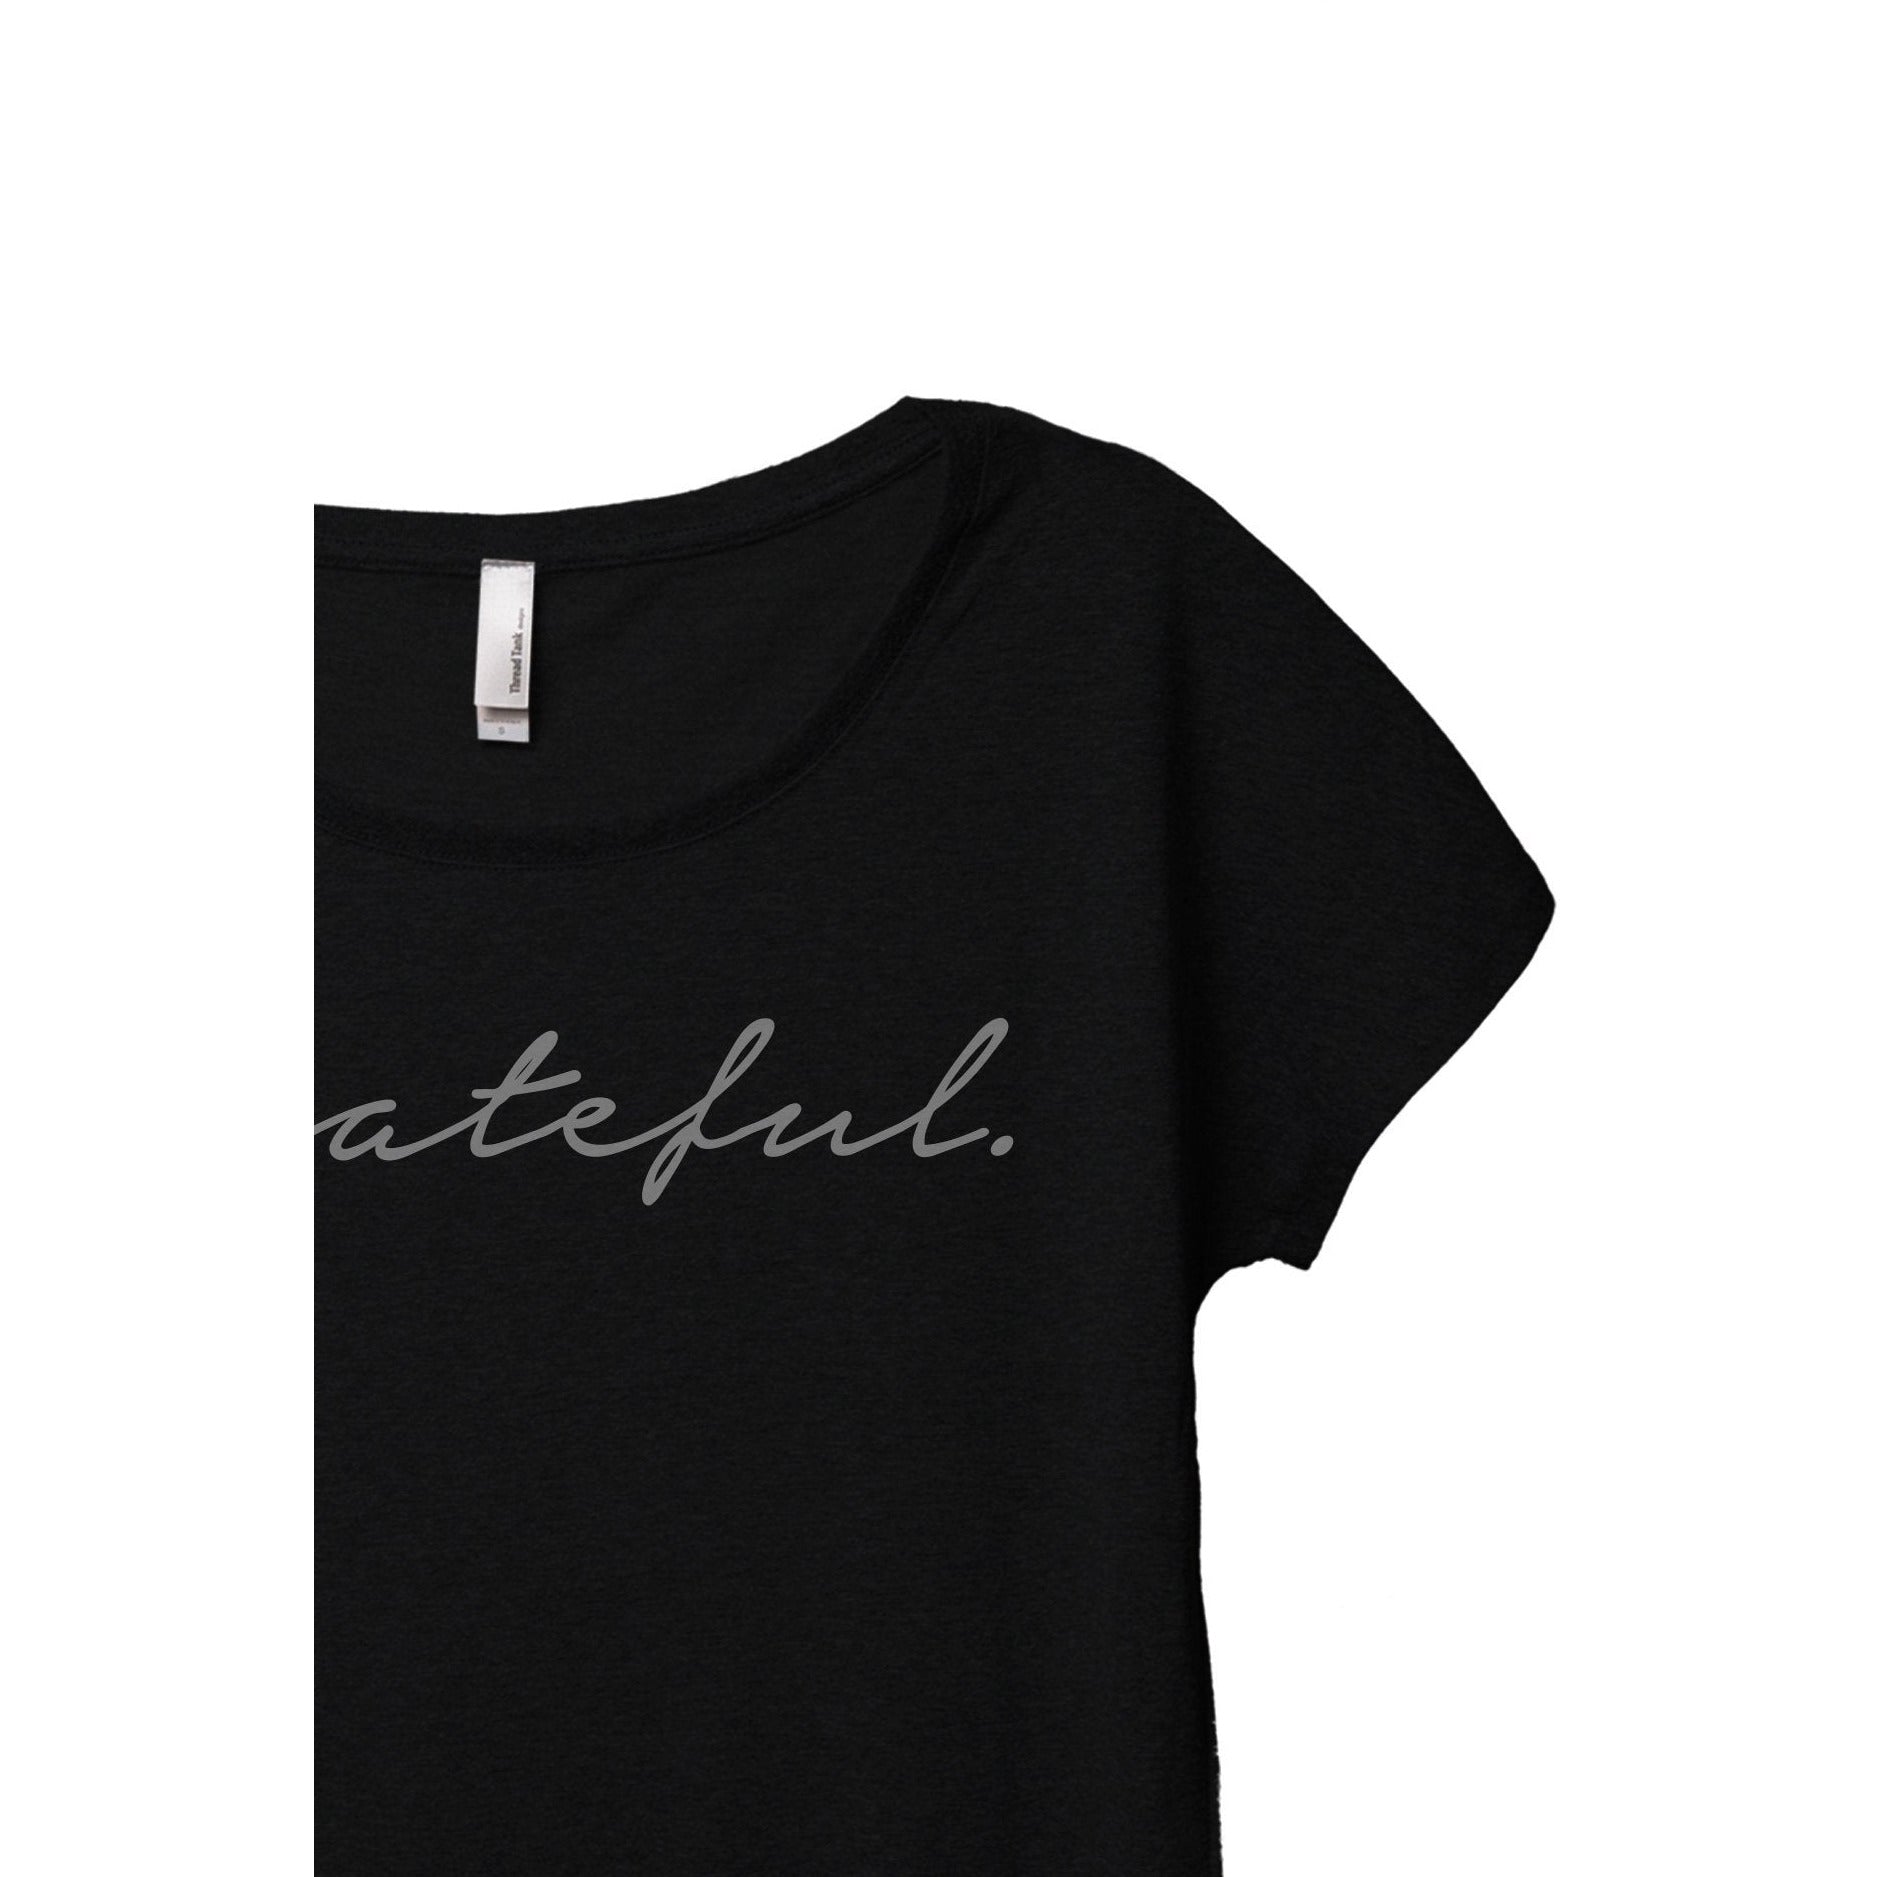 Grateful Women's Relaxed Slouchy Dolman T-Shirt Tee Heather Black Closeup Details